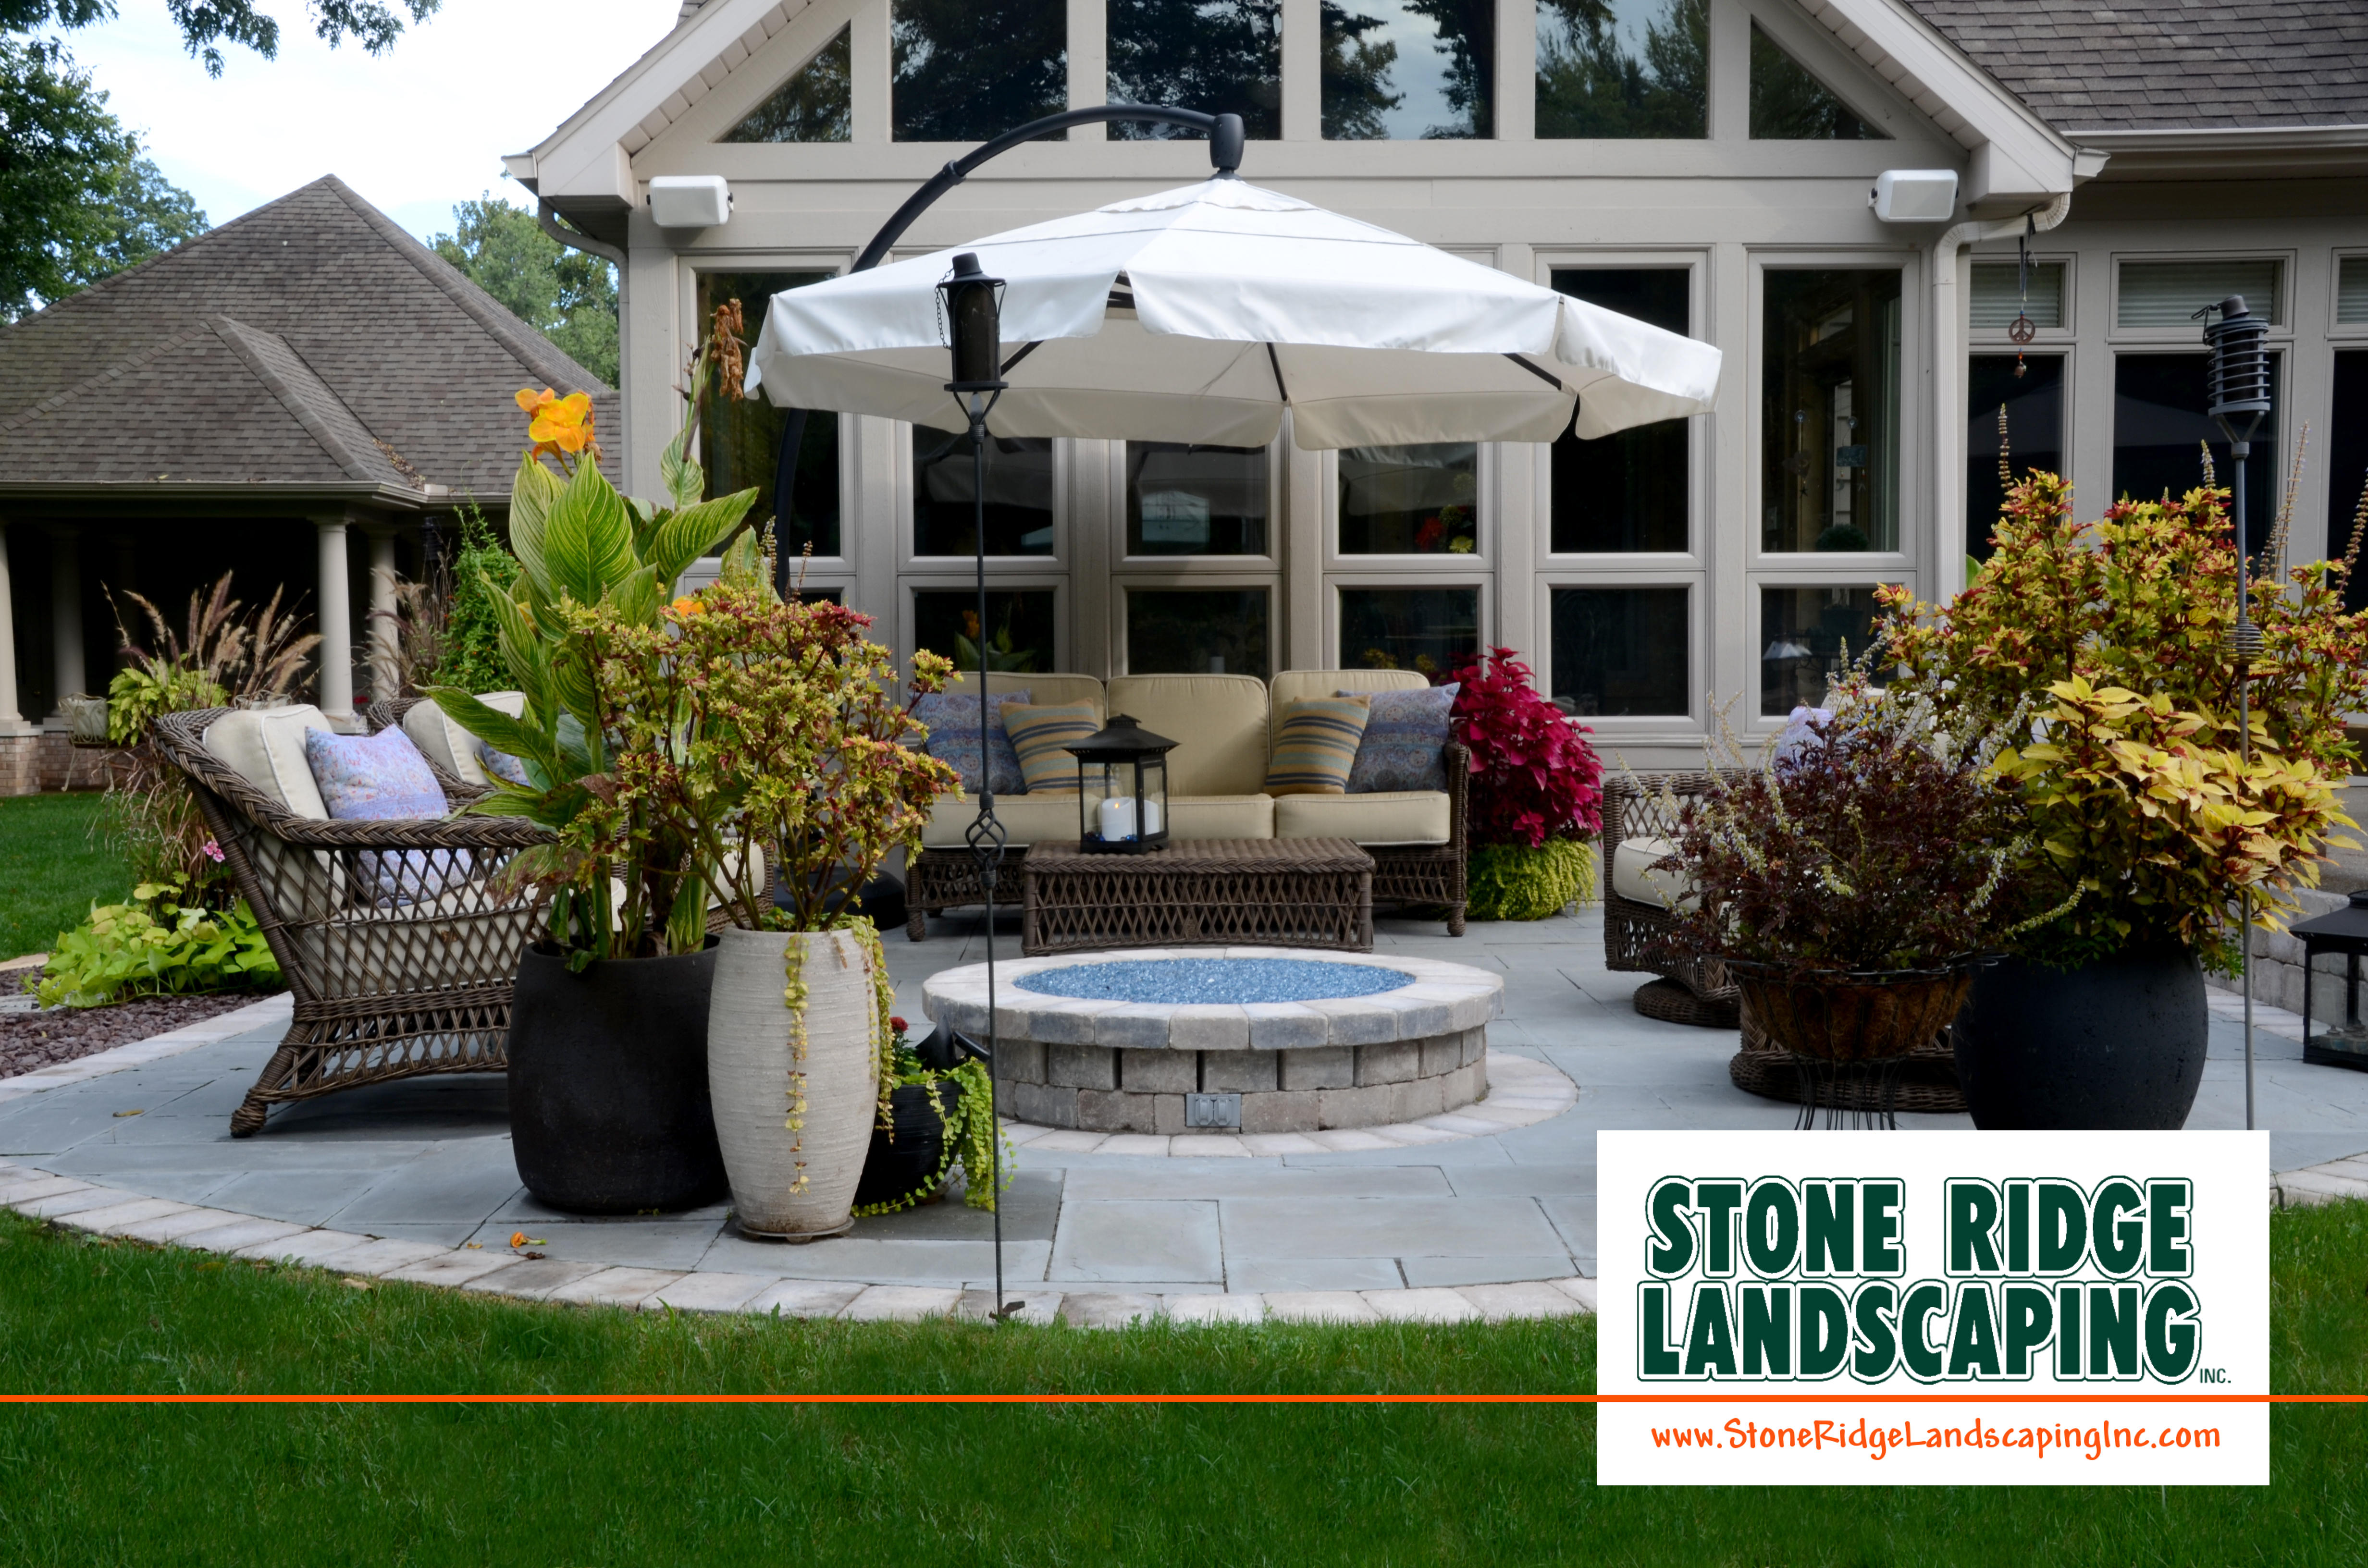 Landscape Contractor | Stone Ridge Landscaping Inc. Blog